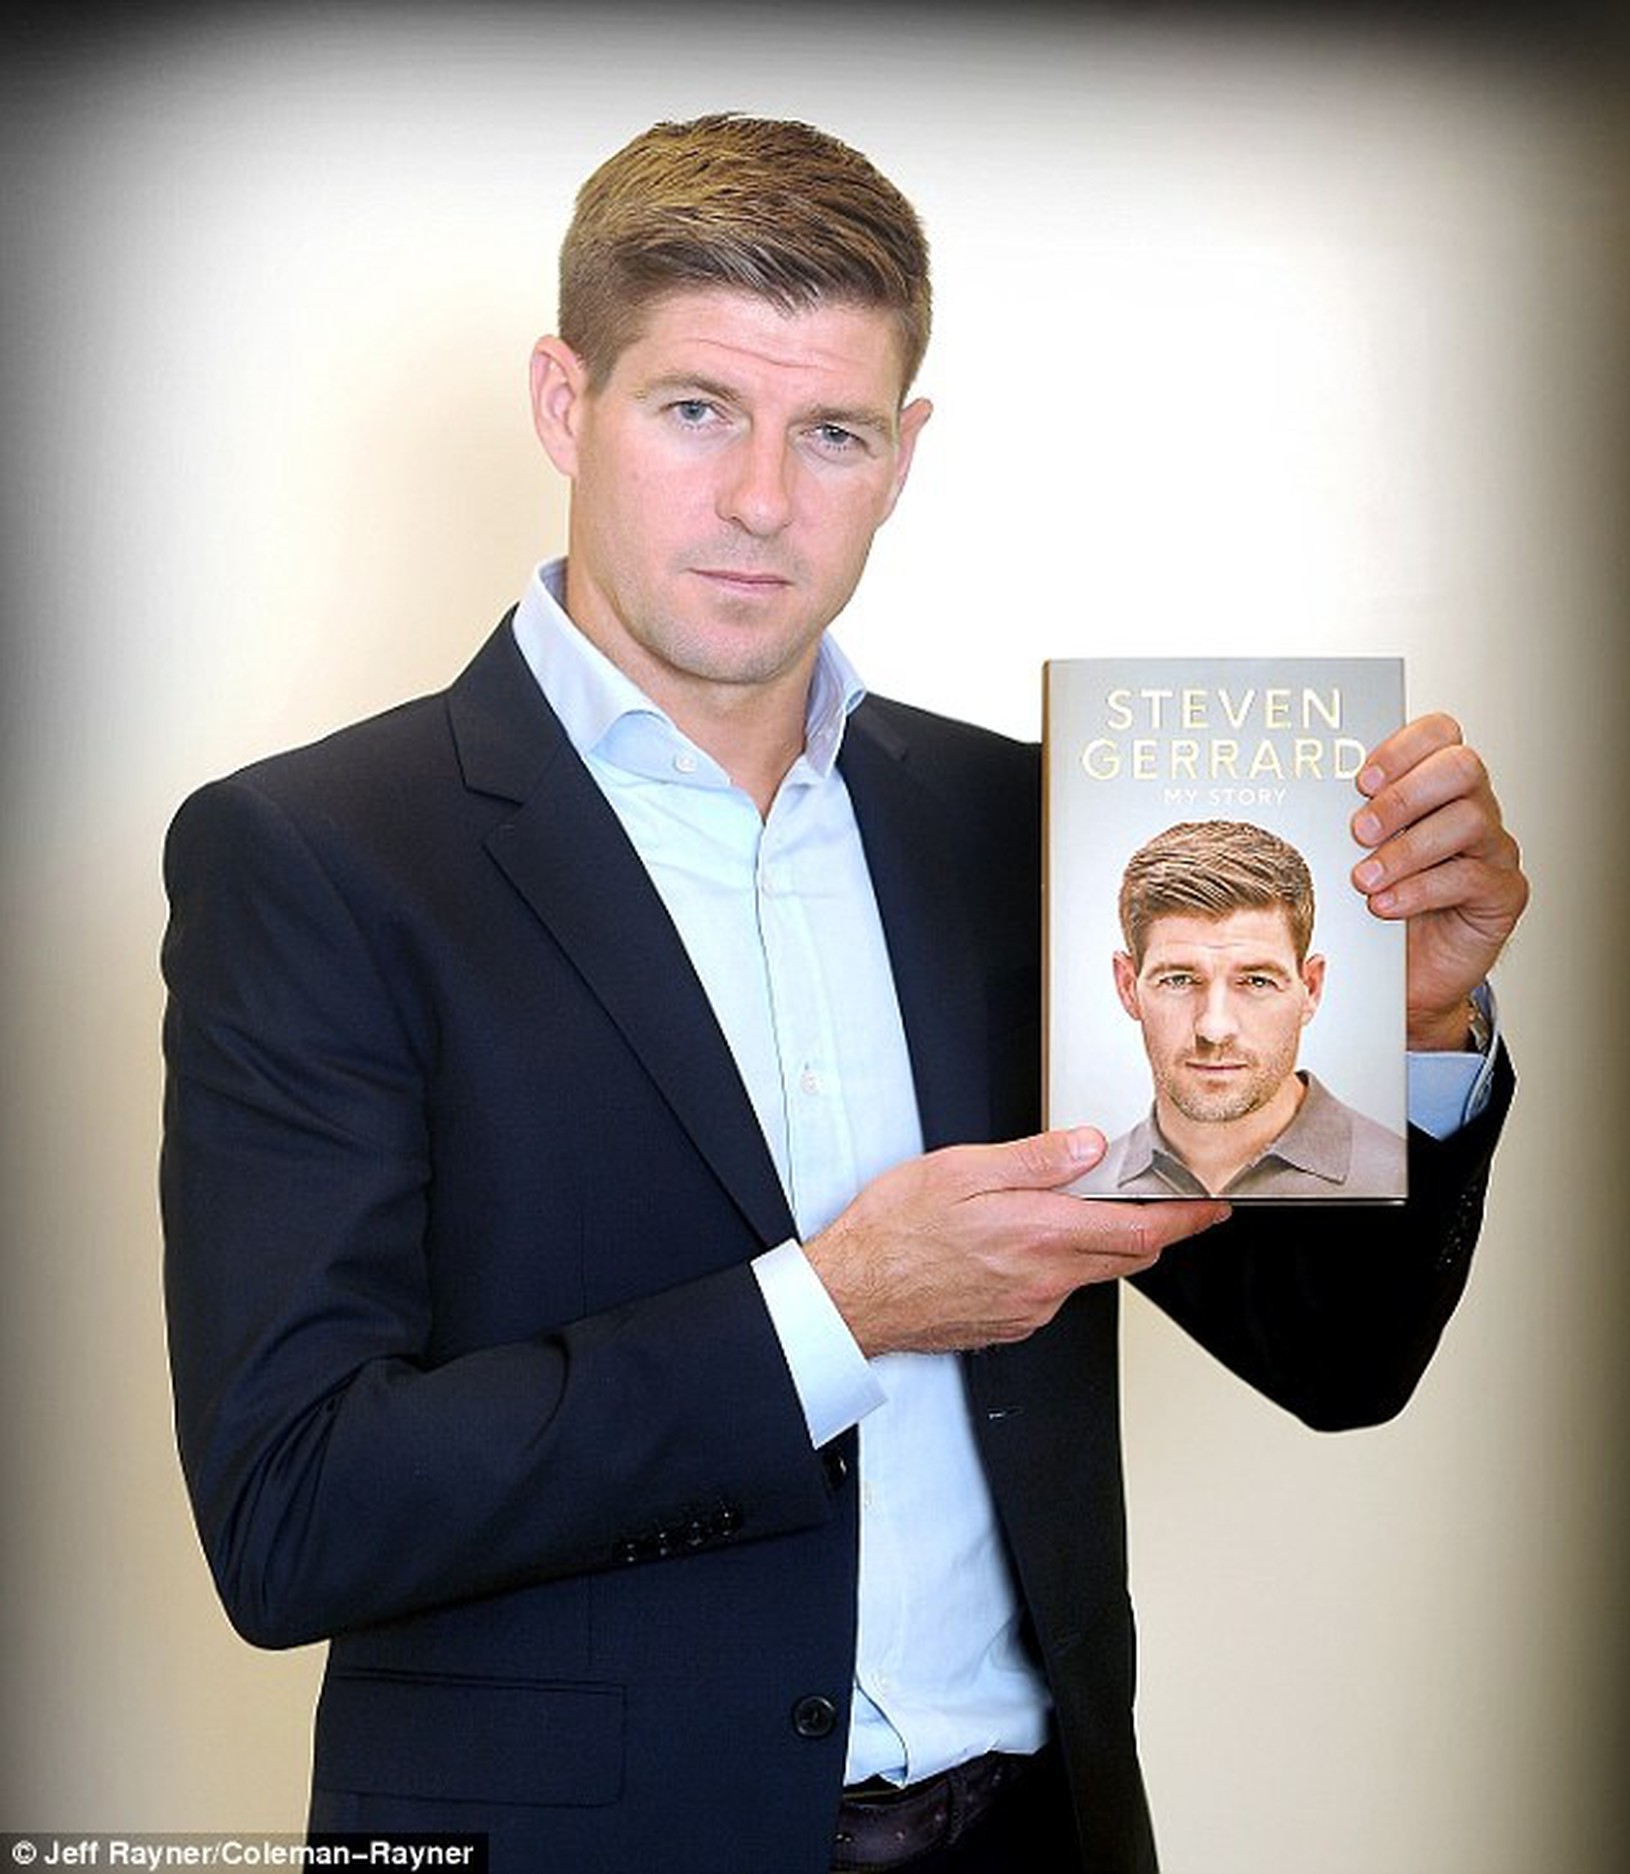 Steven Gerrard so svojou